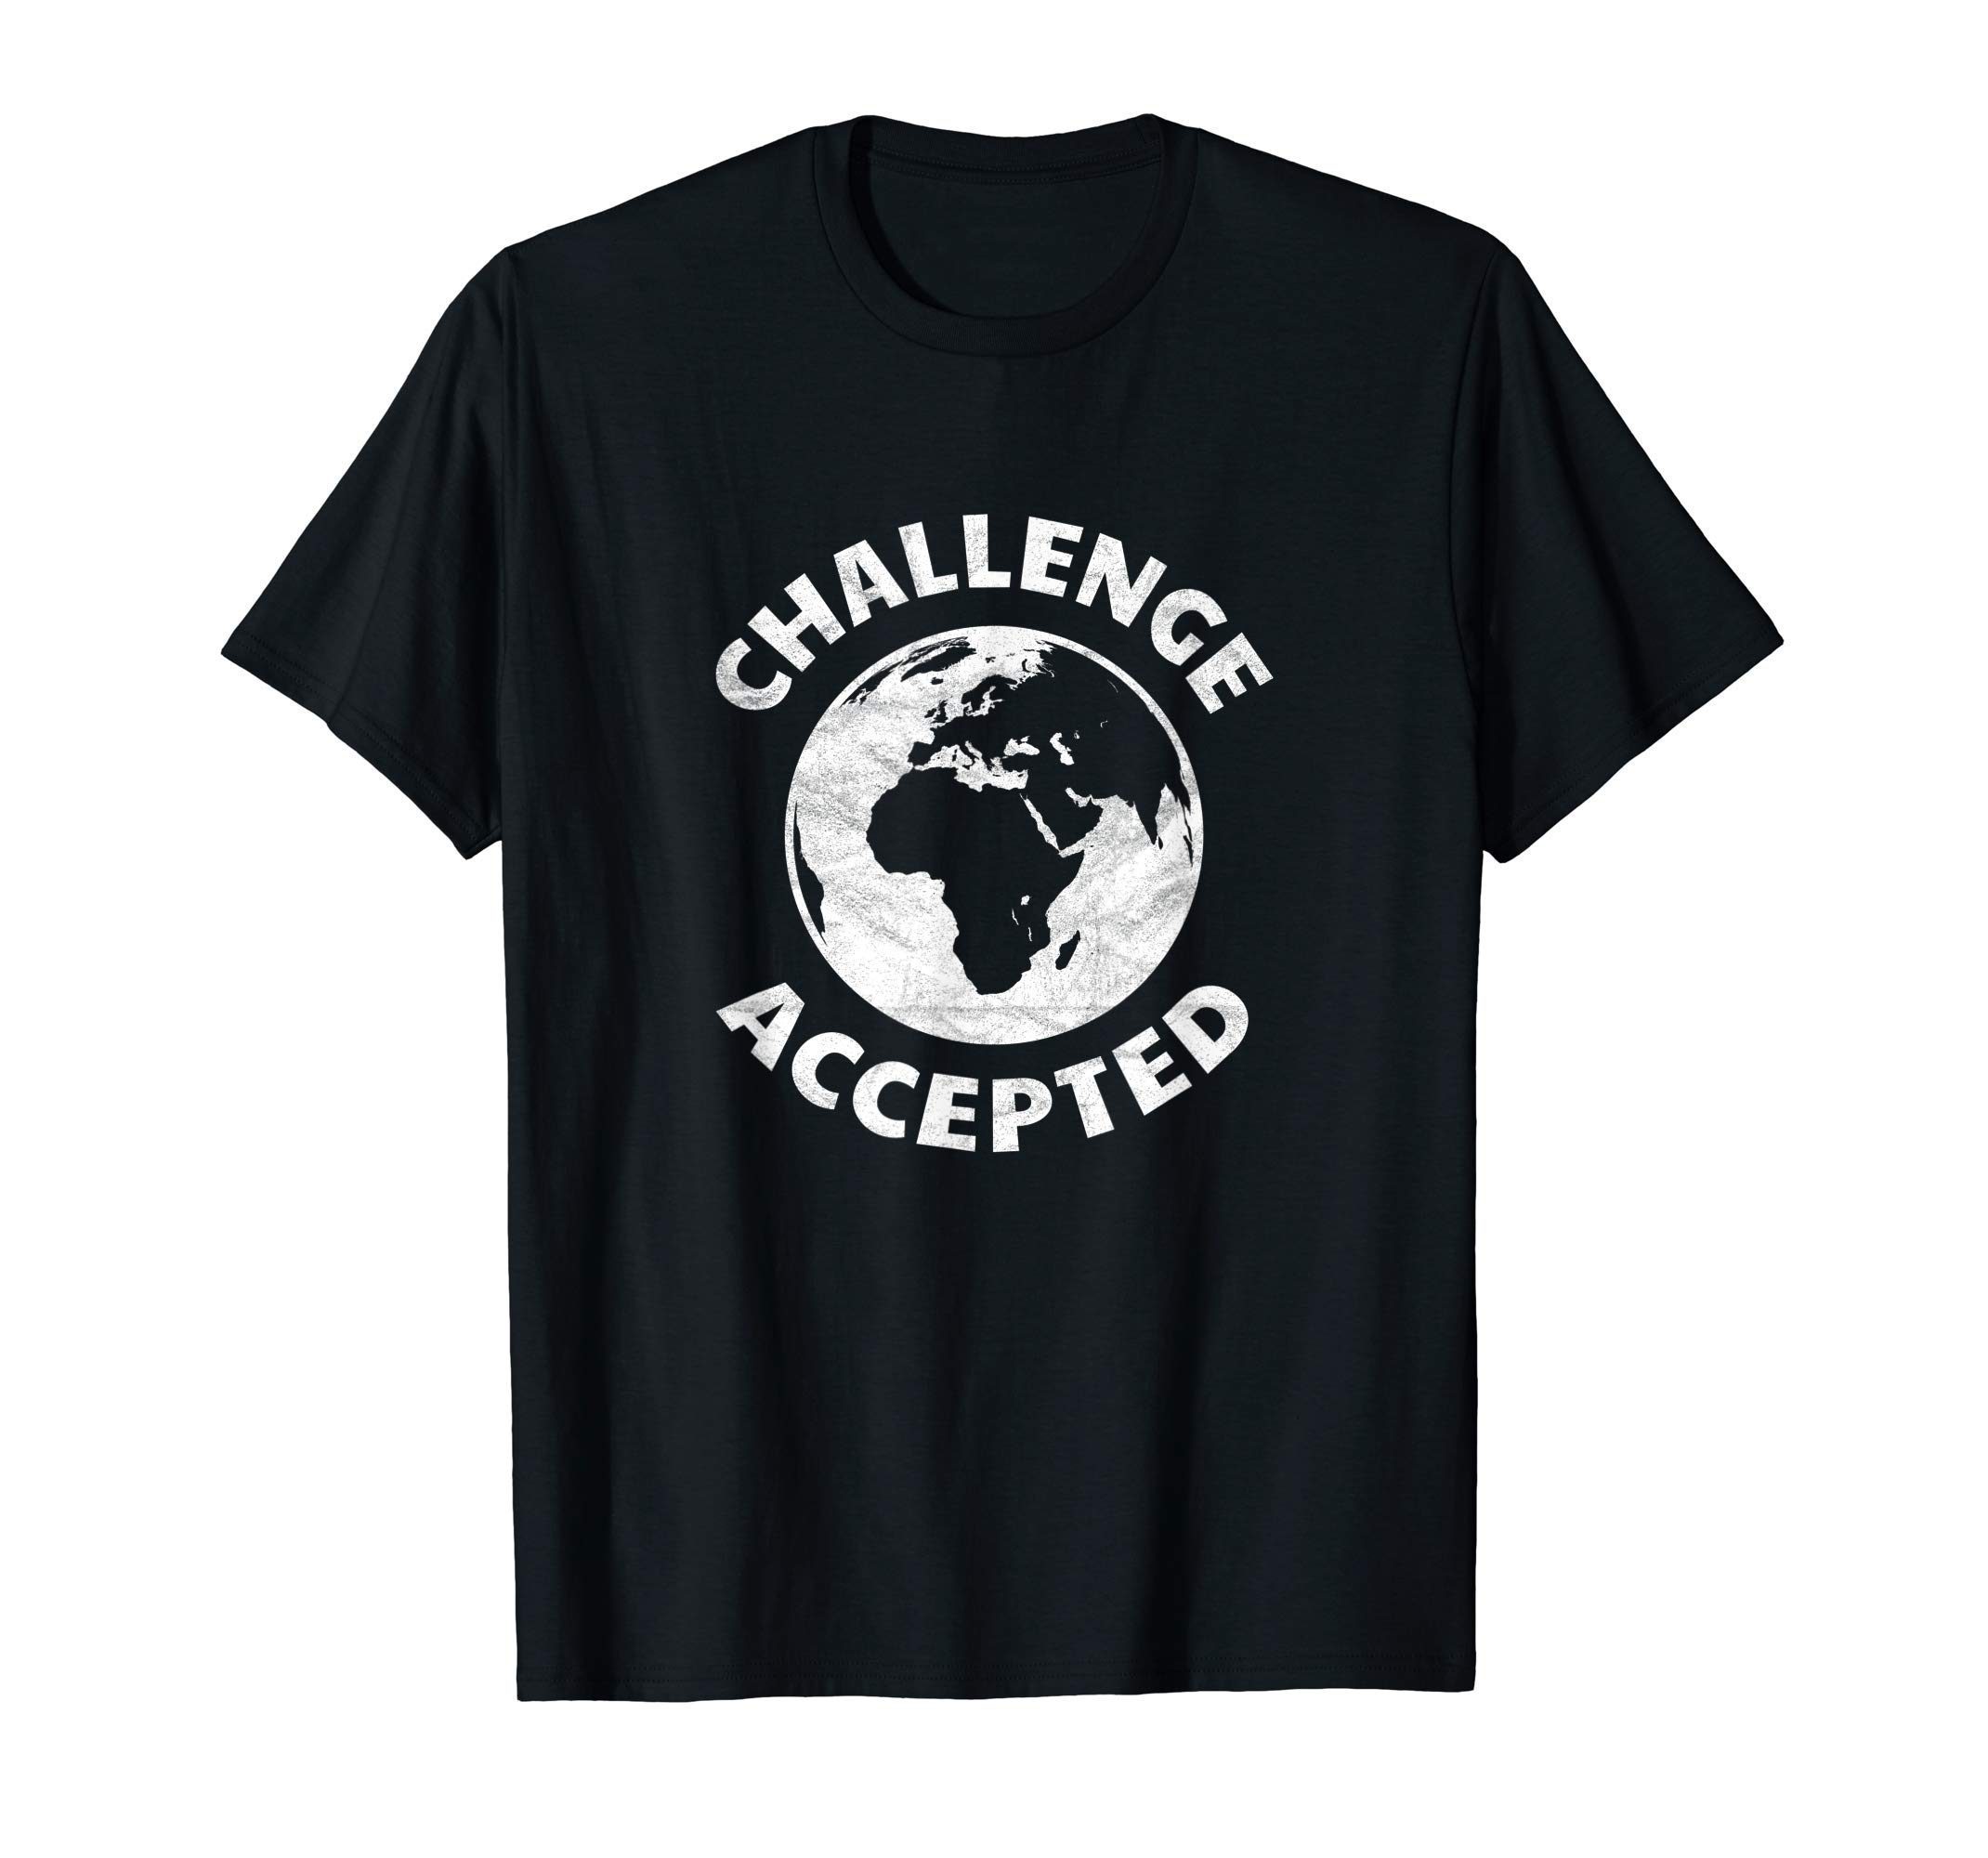 World map t shirt challenge accepted globetrotter jet-setter ...